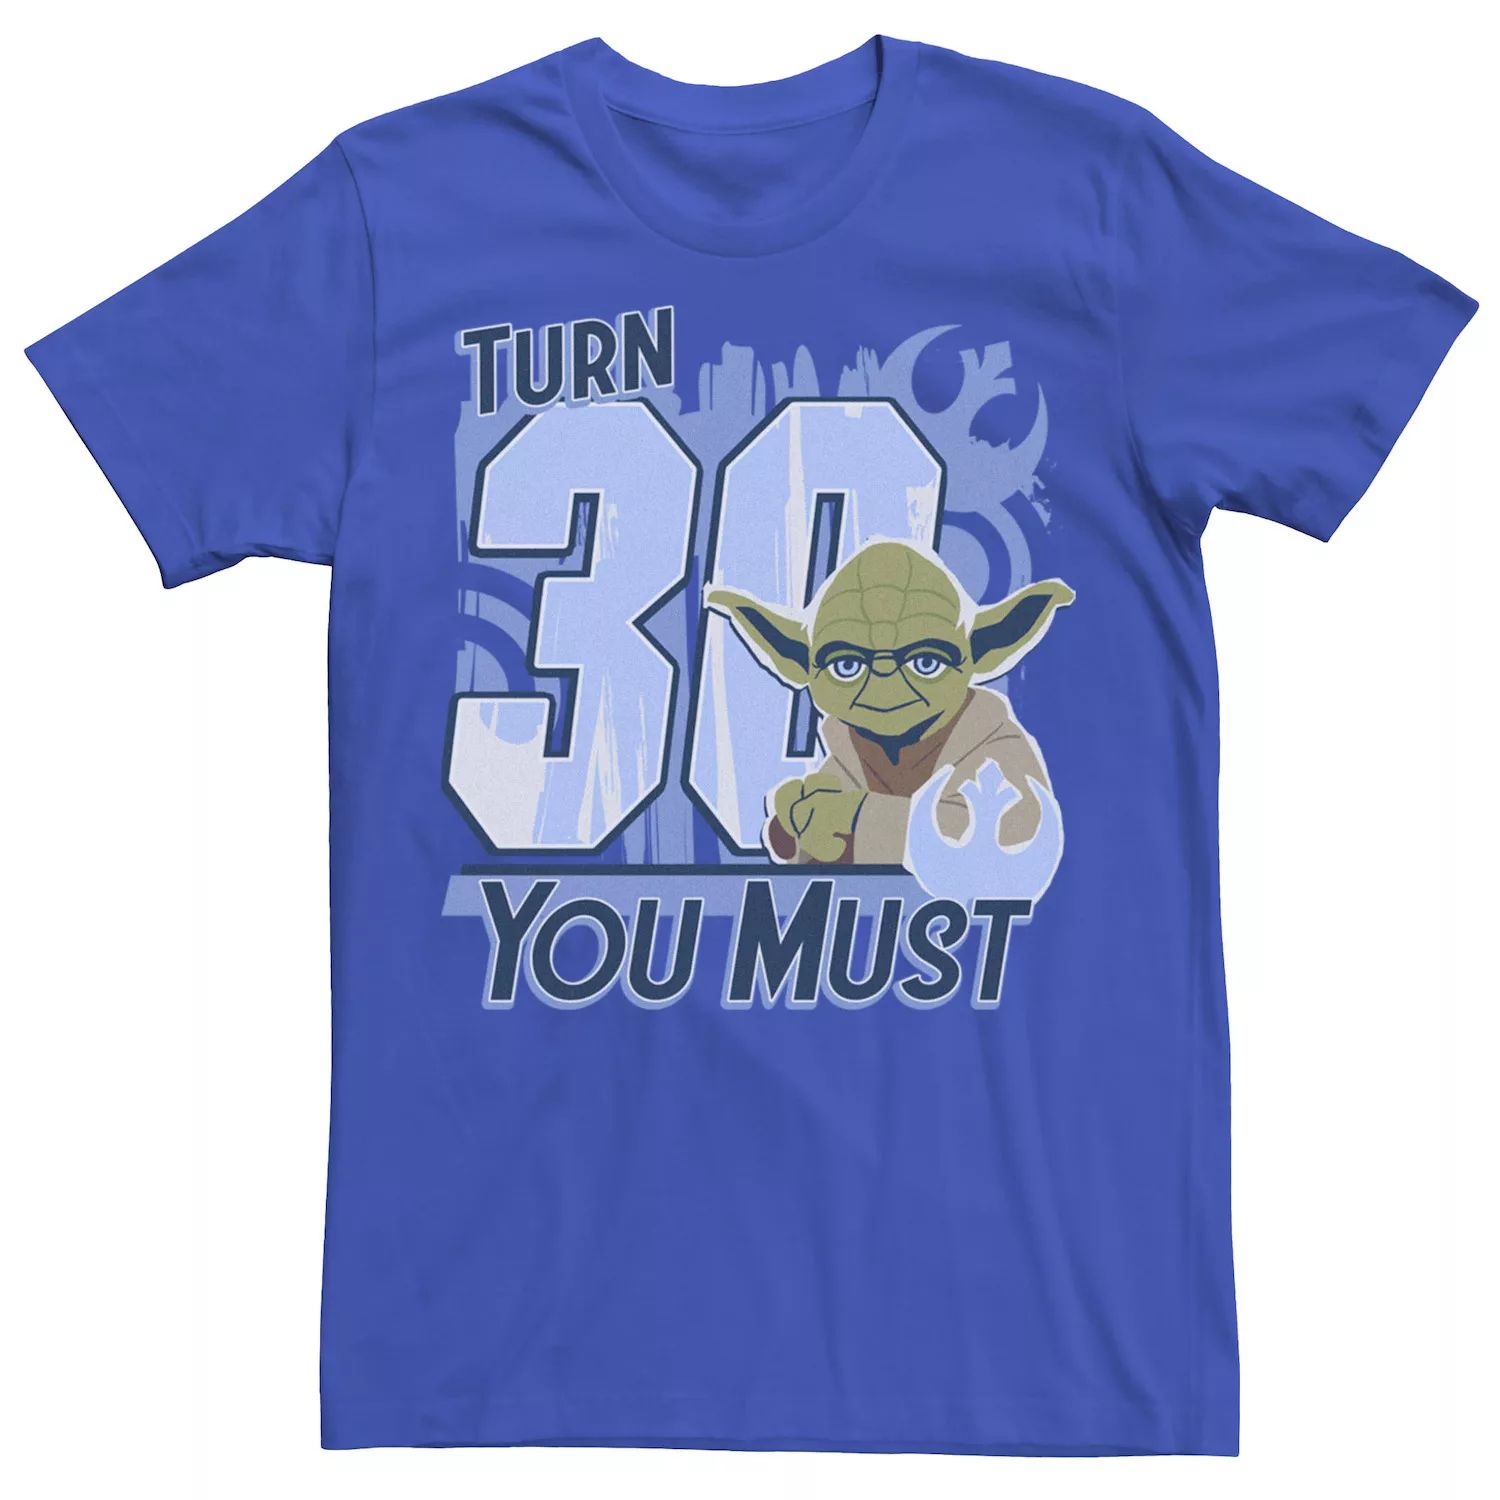 Мужская футболка с логотипом и портретом Star Wars Yoda Turn 30 You Must Rebel